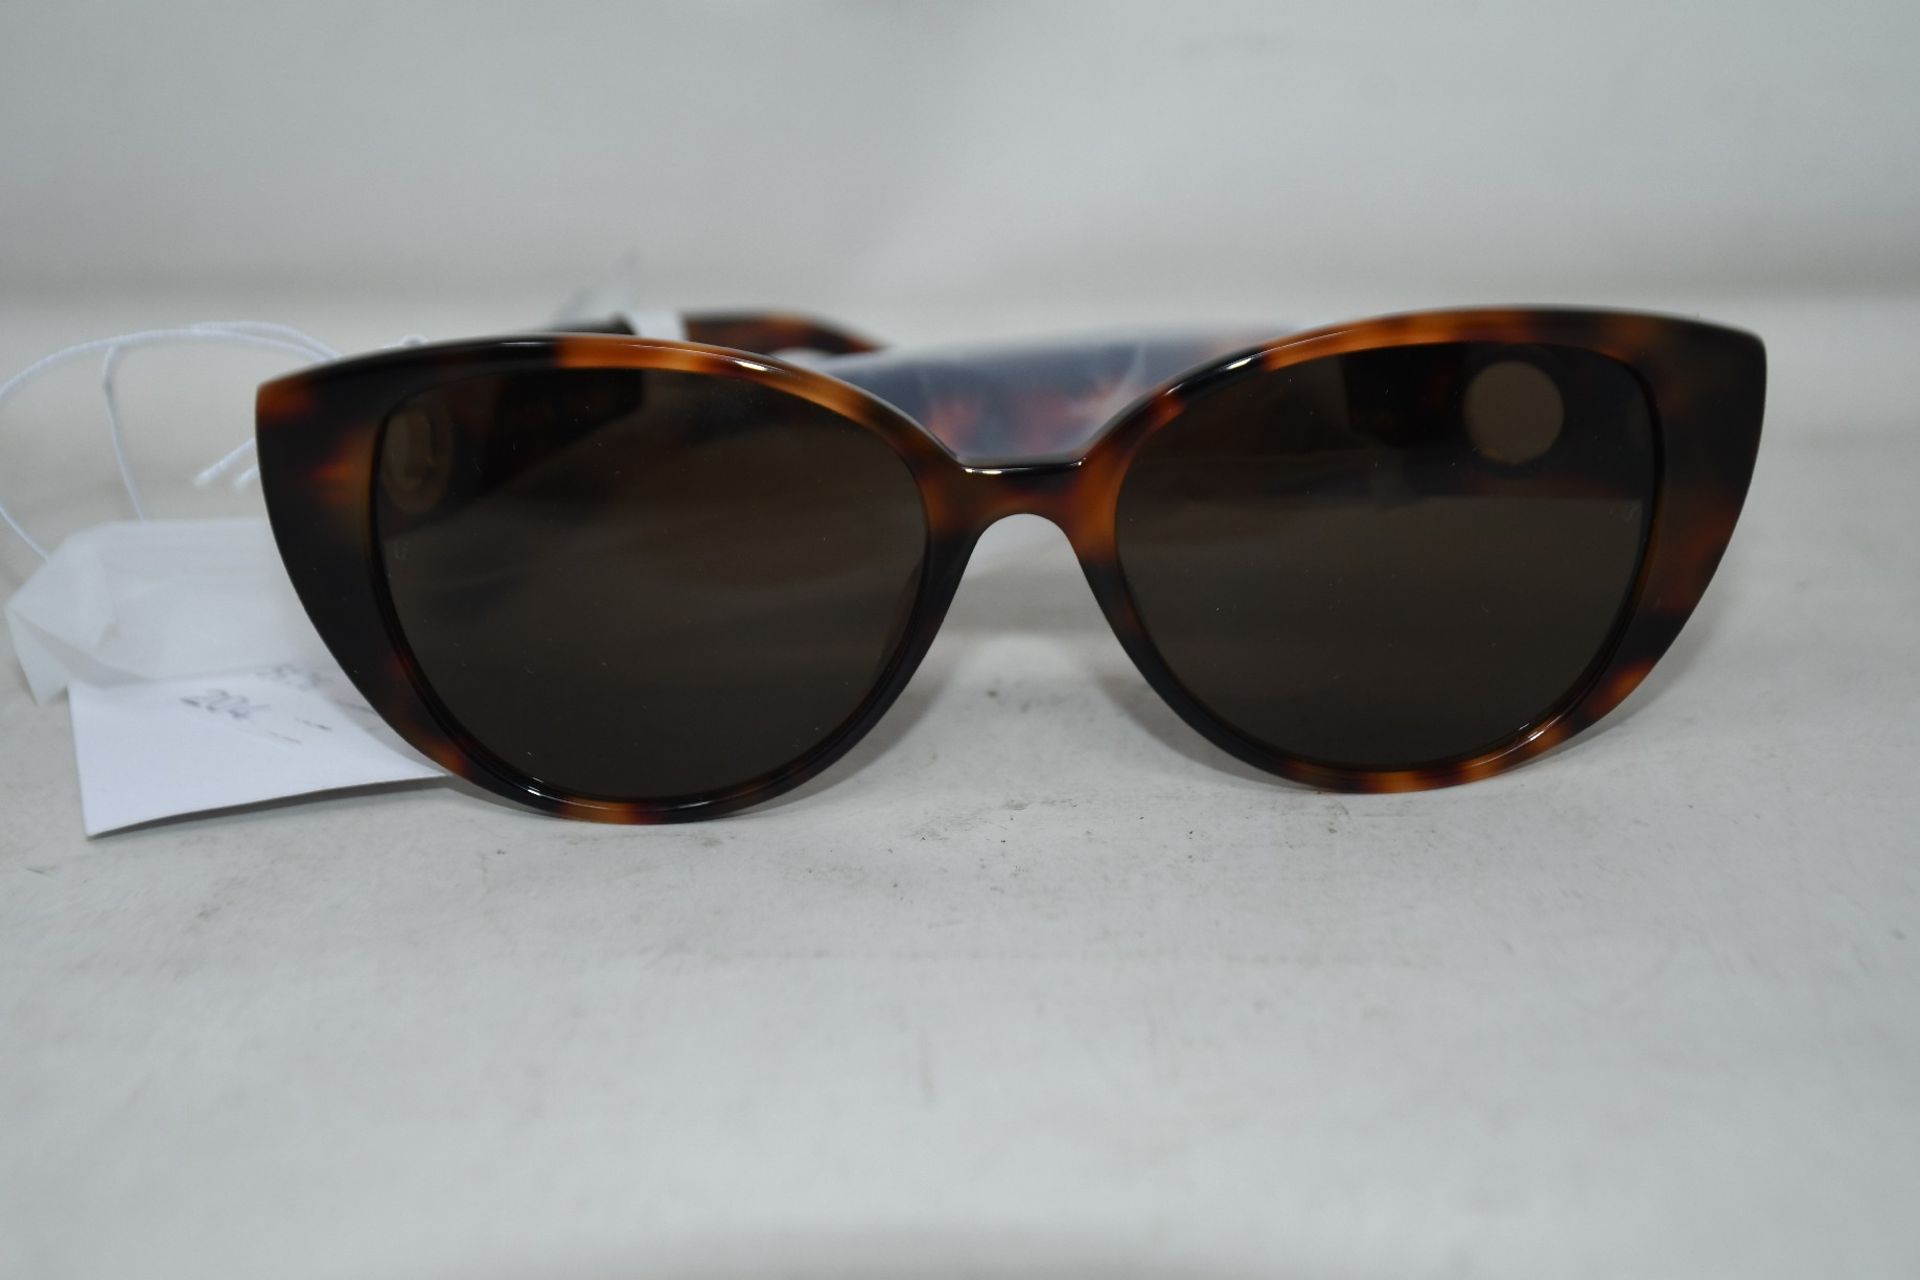 A pair of as new Linda Farrow Sarandon sunglasses (RRP £395 - no case).